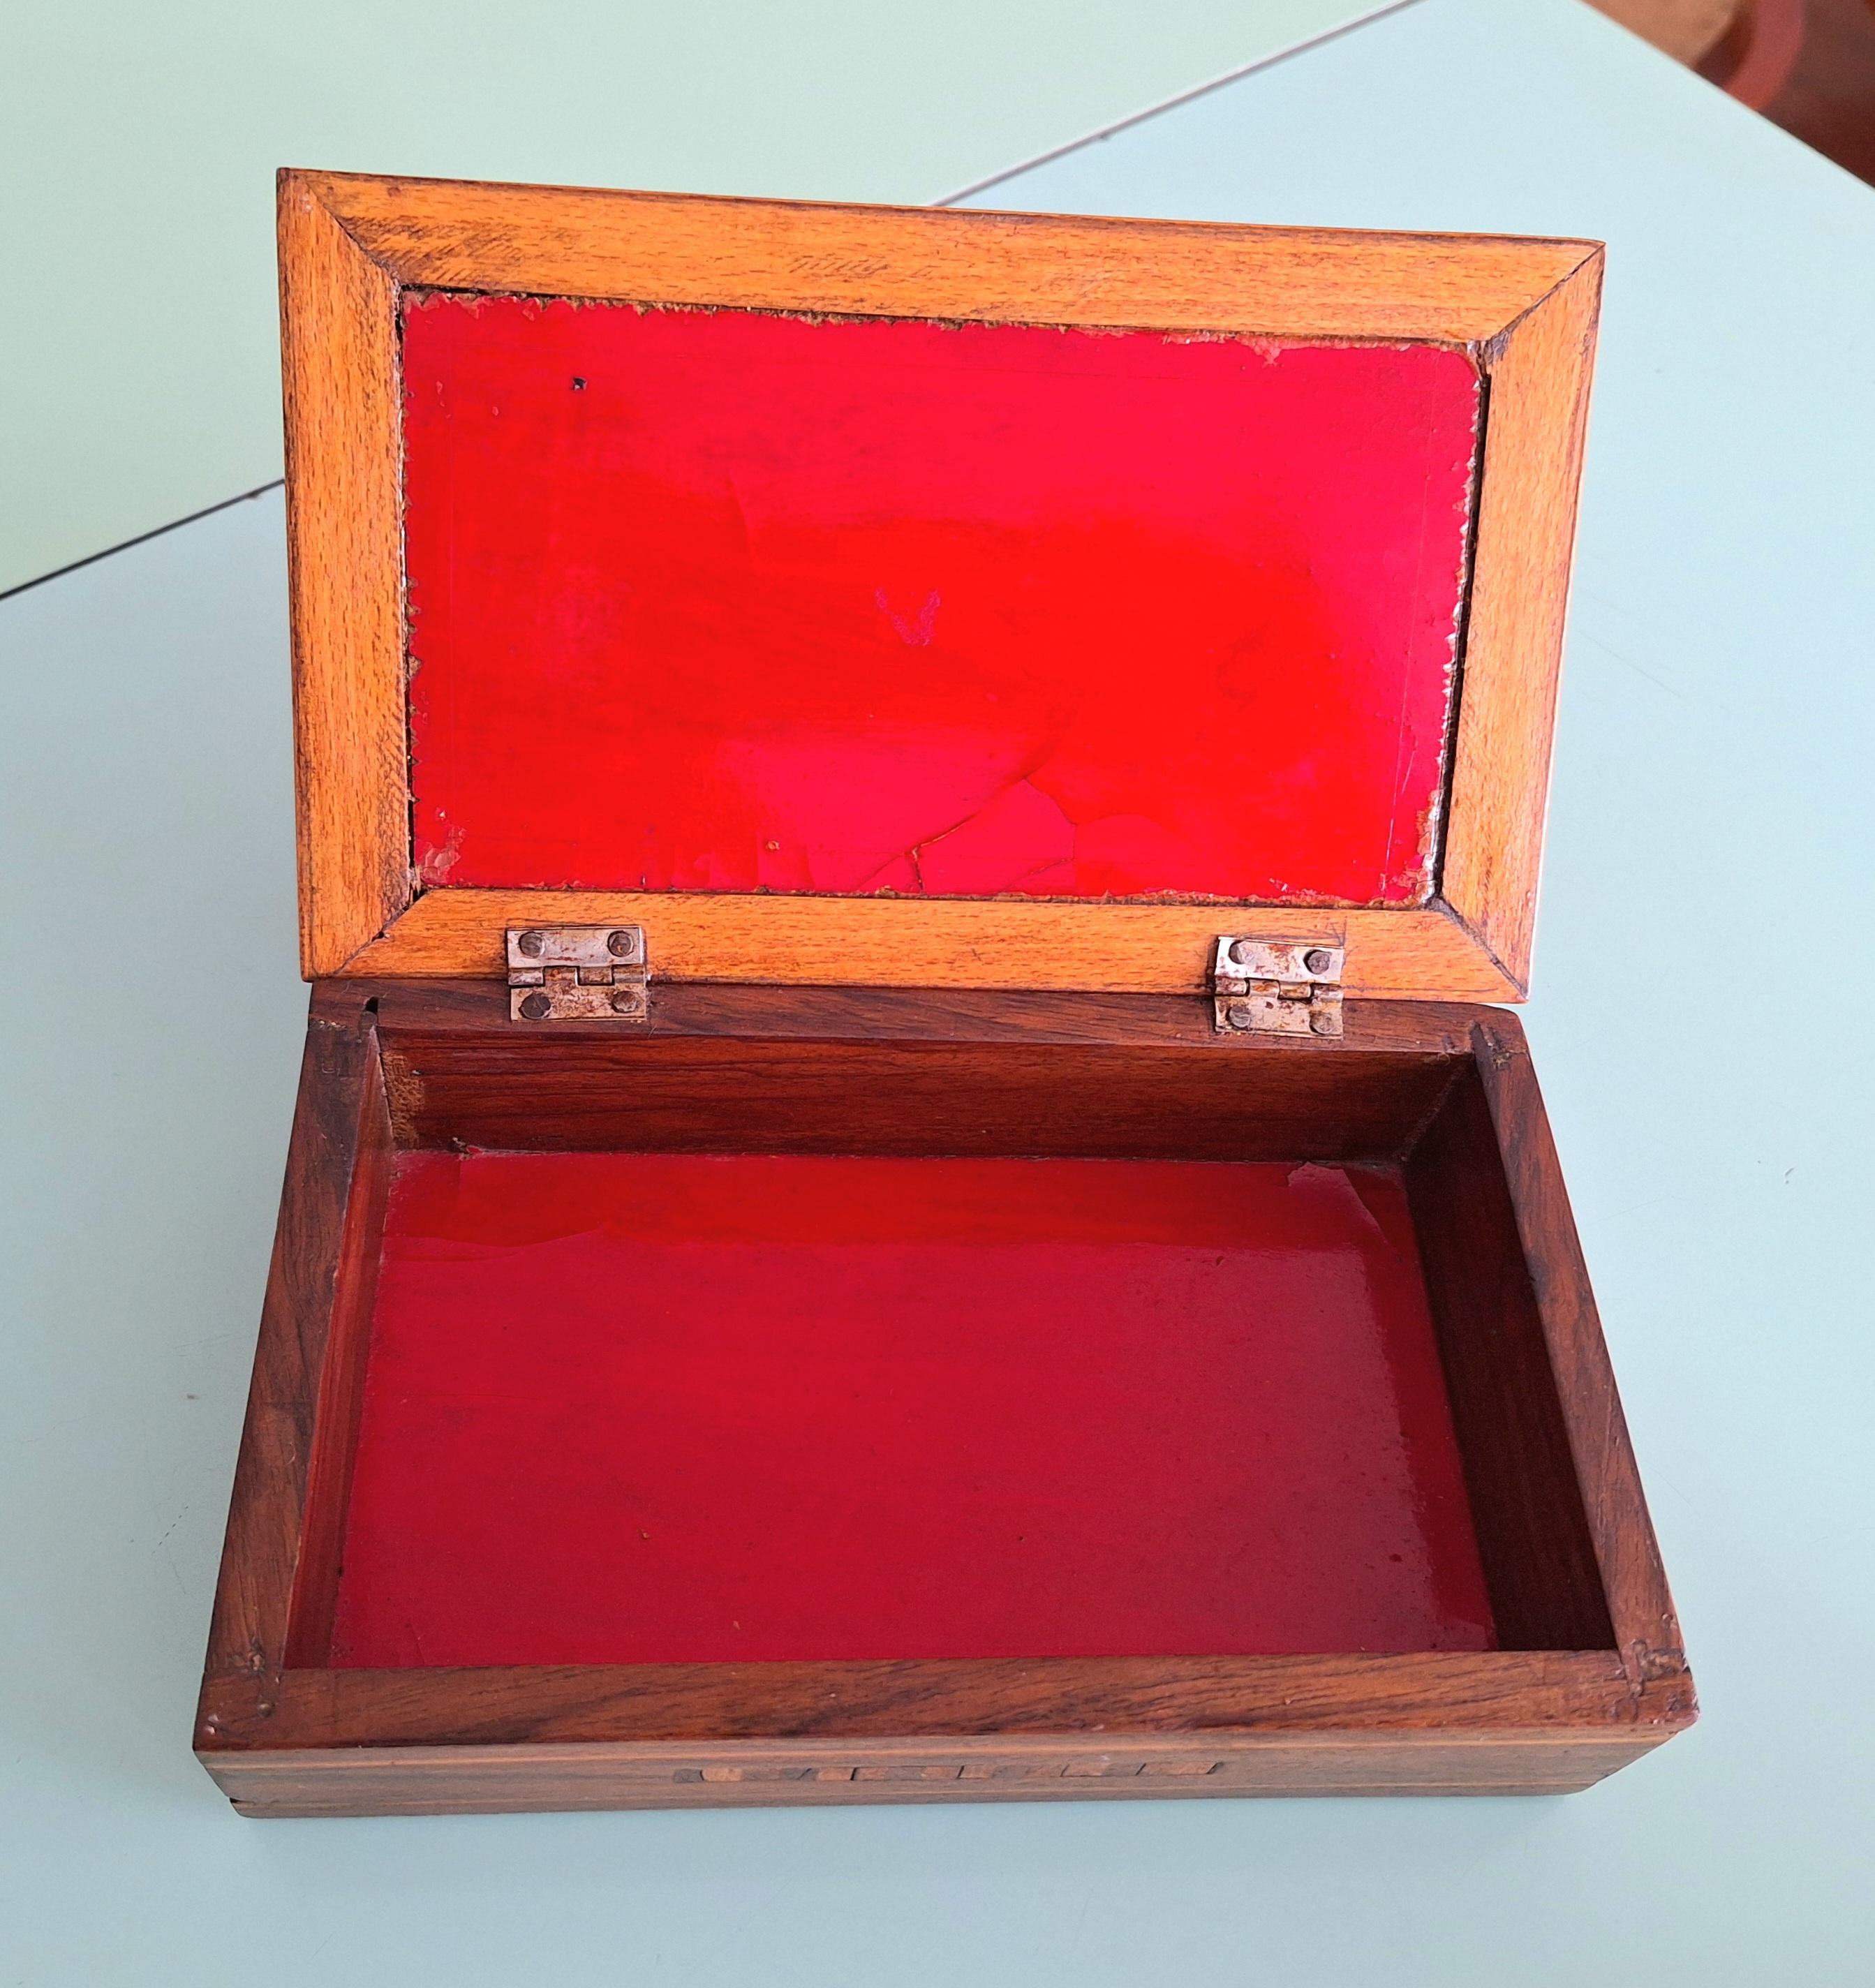 Wood box  intarziato (inlaid woodwork).